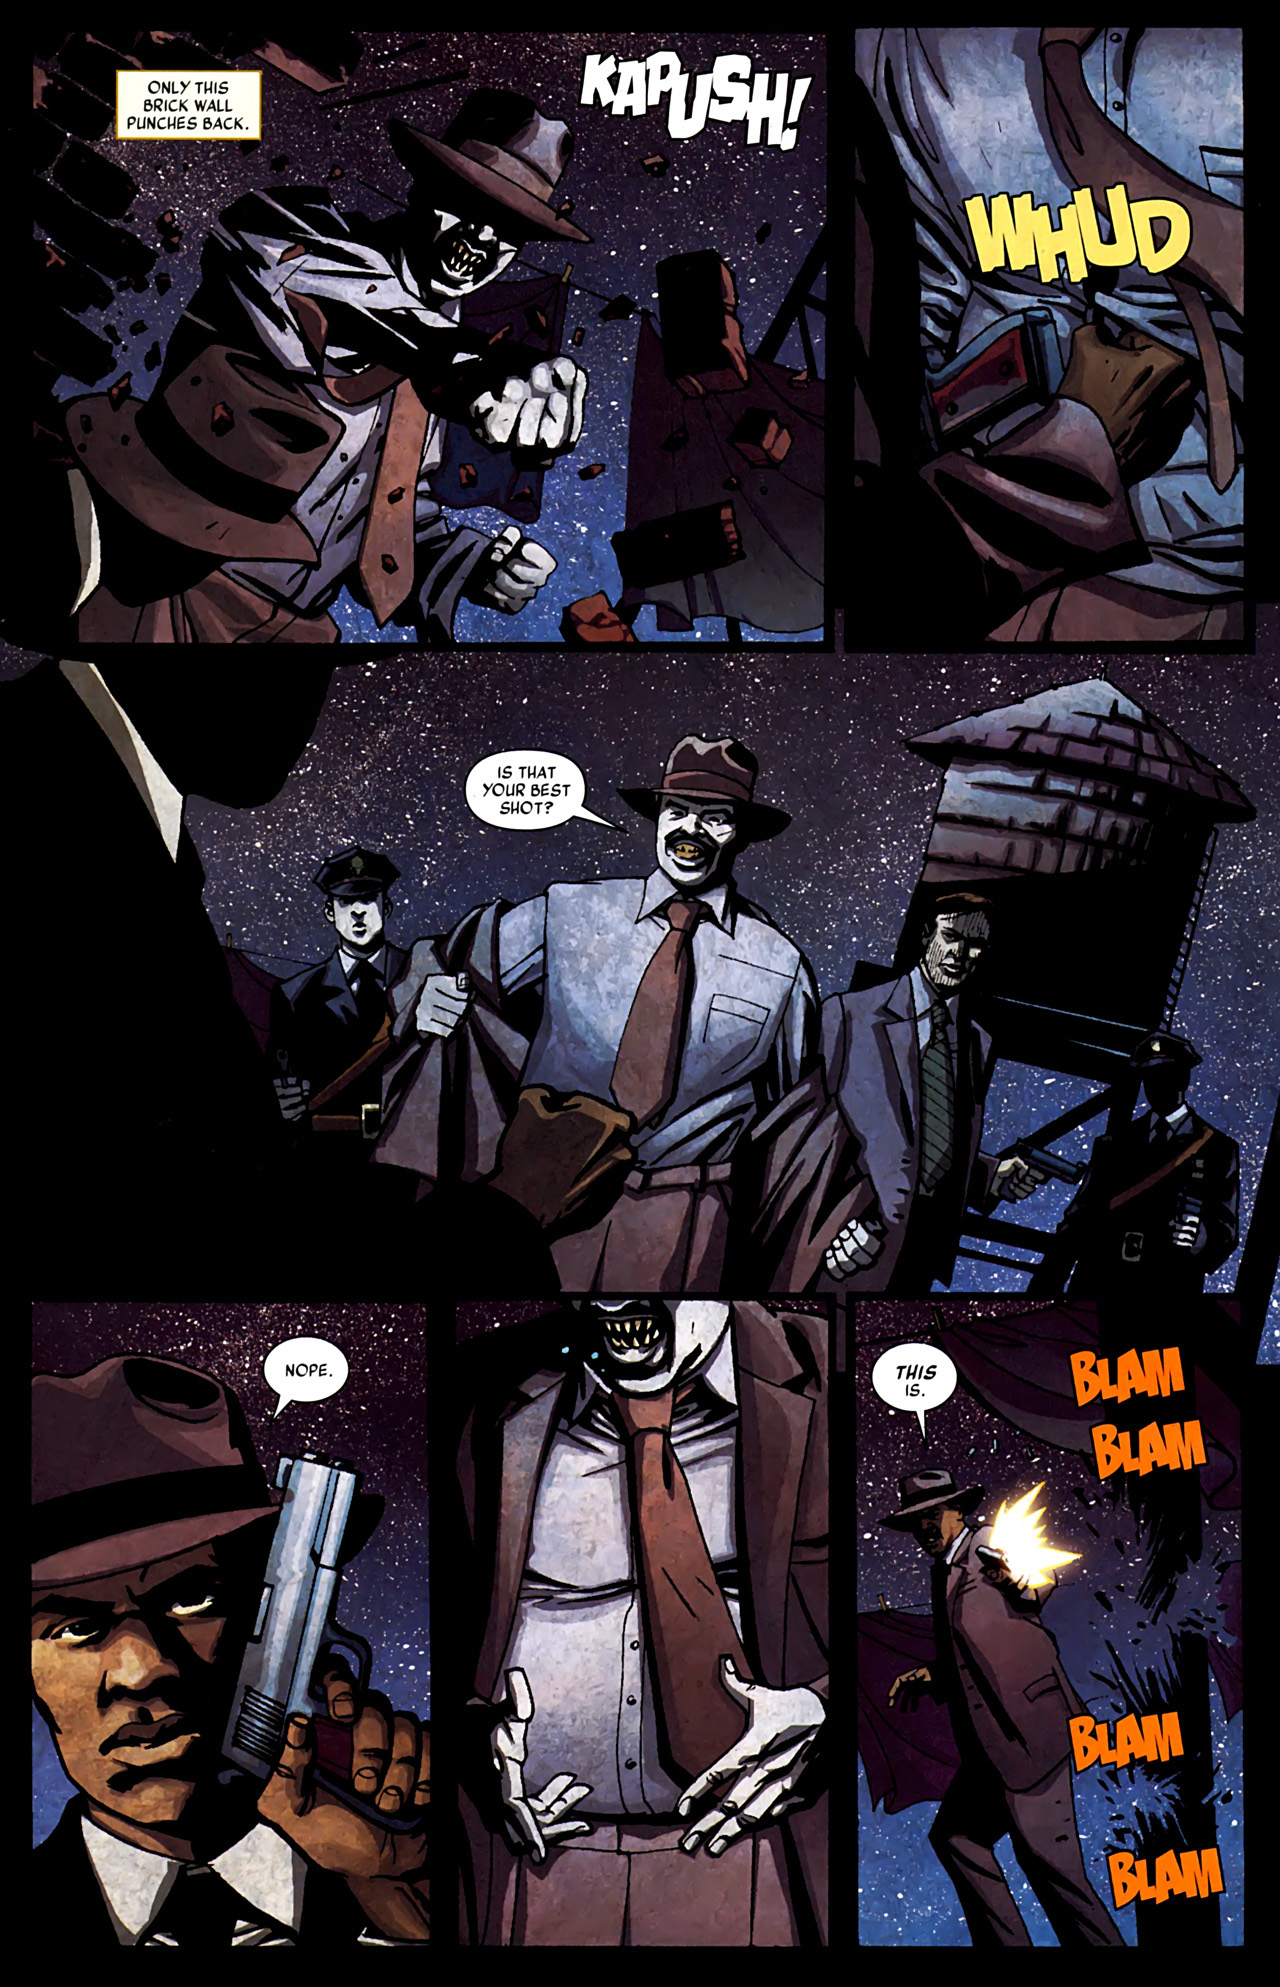 Luke Cage Noir #2 (of 4) - Moon Over Harlem, Part 2 